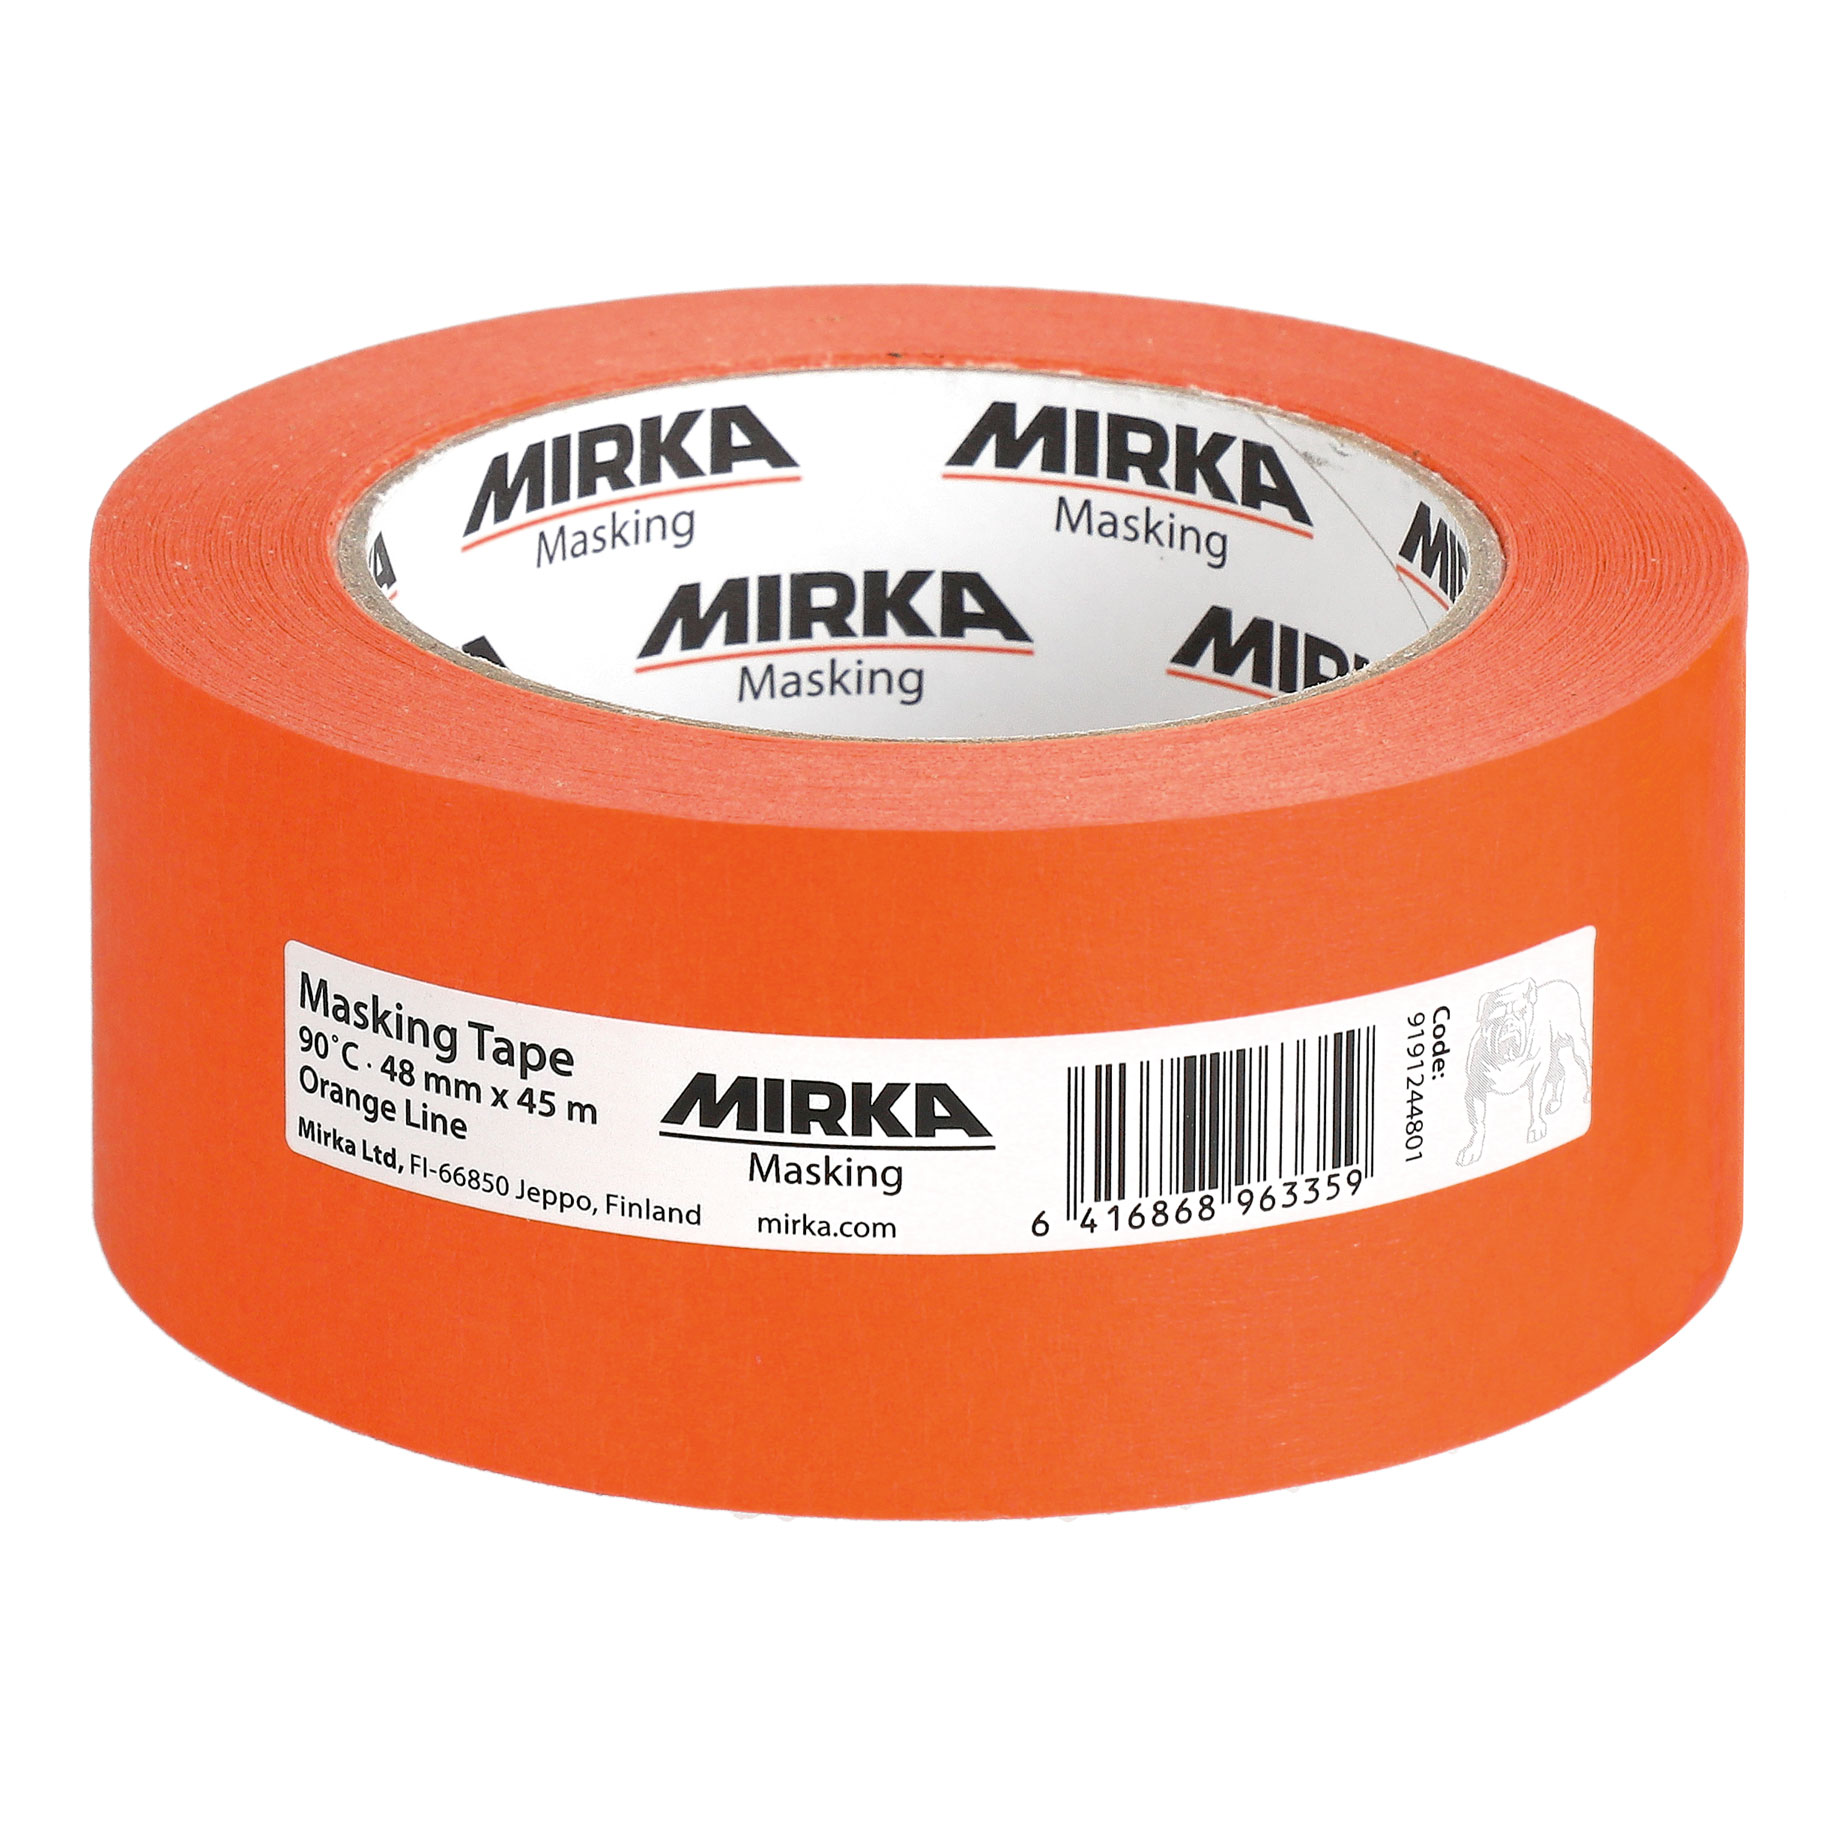 Mirka Masking Tape 90°C Orange Line, 48 mm x 45 m